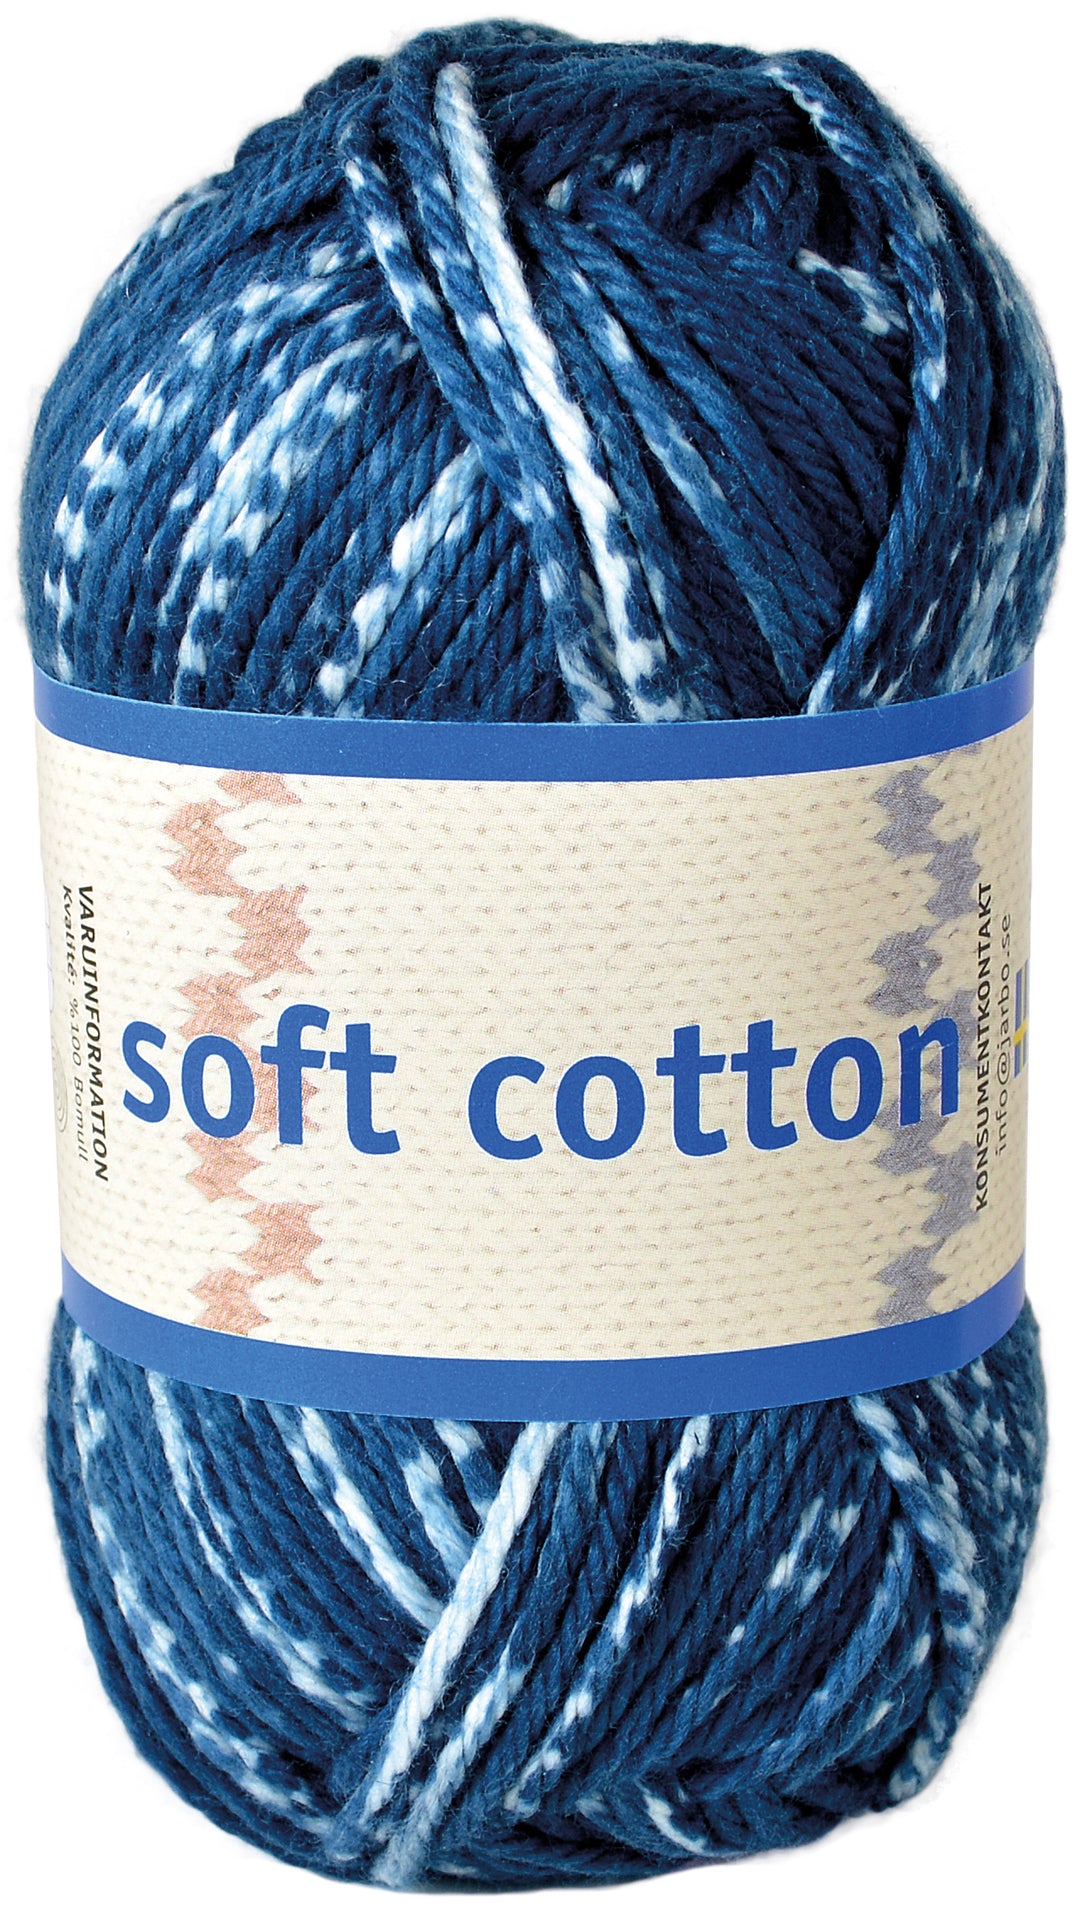 Soft Cotton - 8882 Dark denimblue